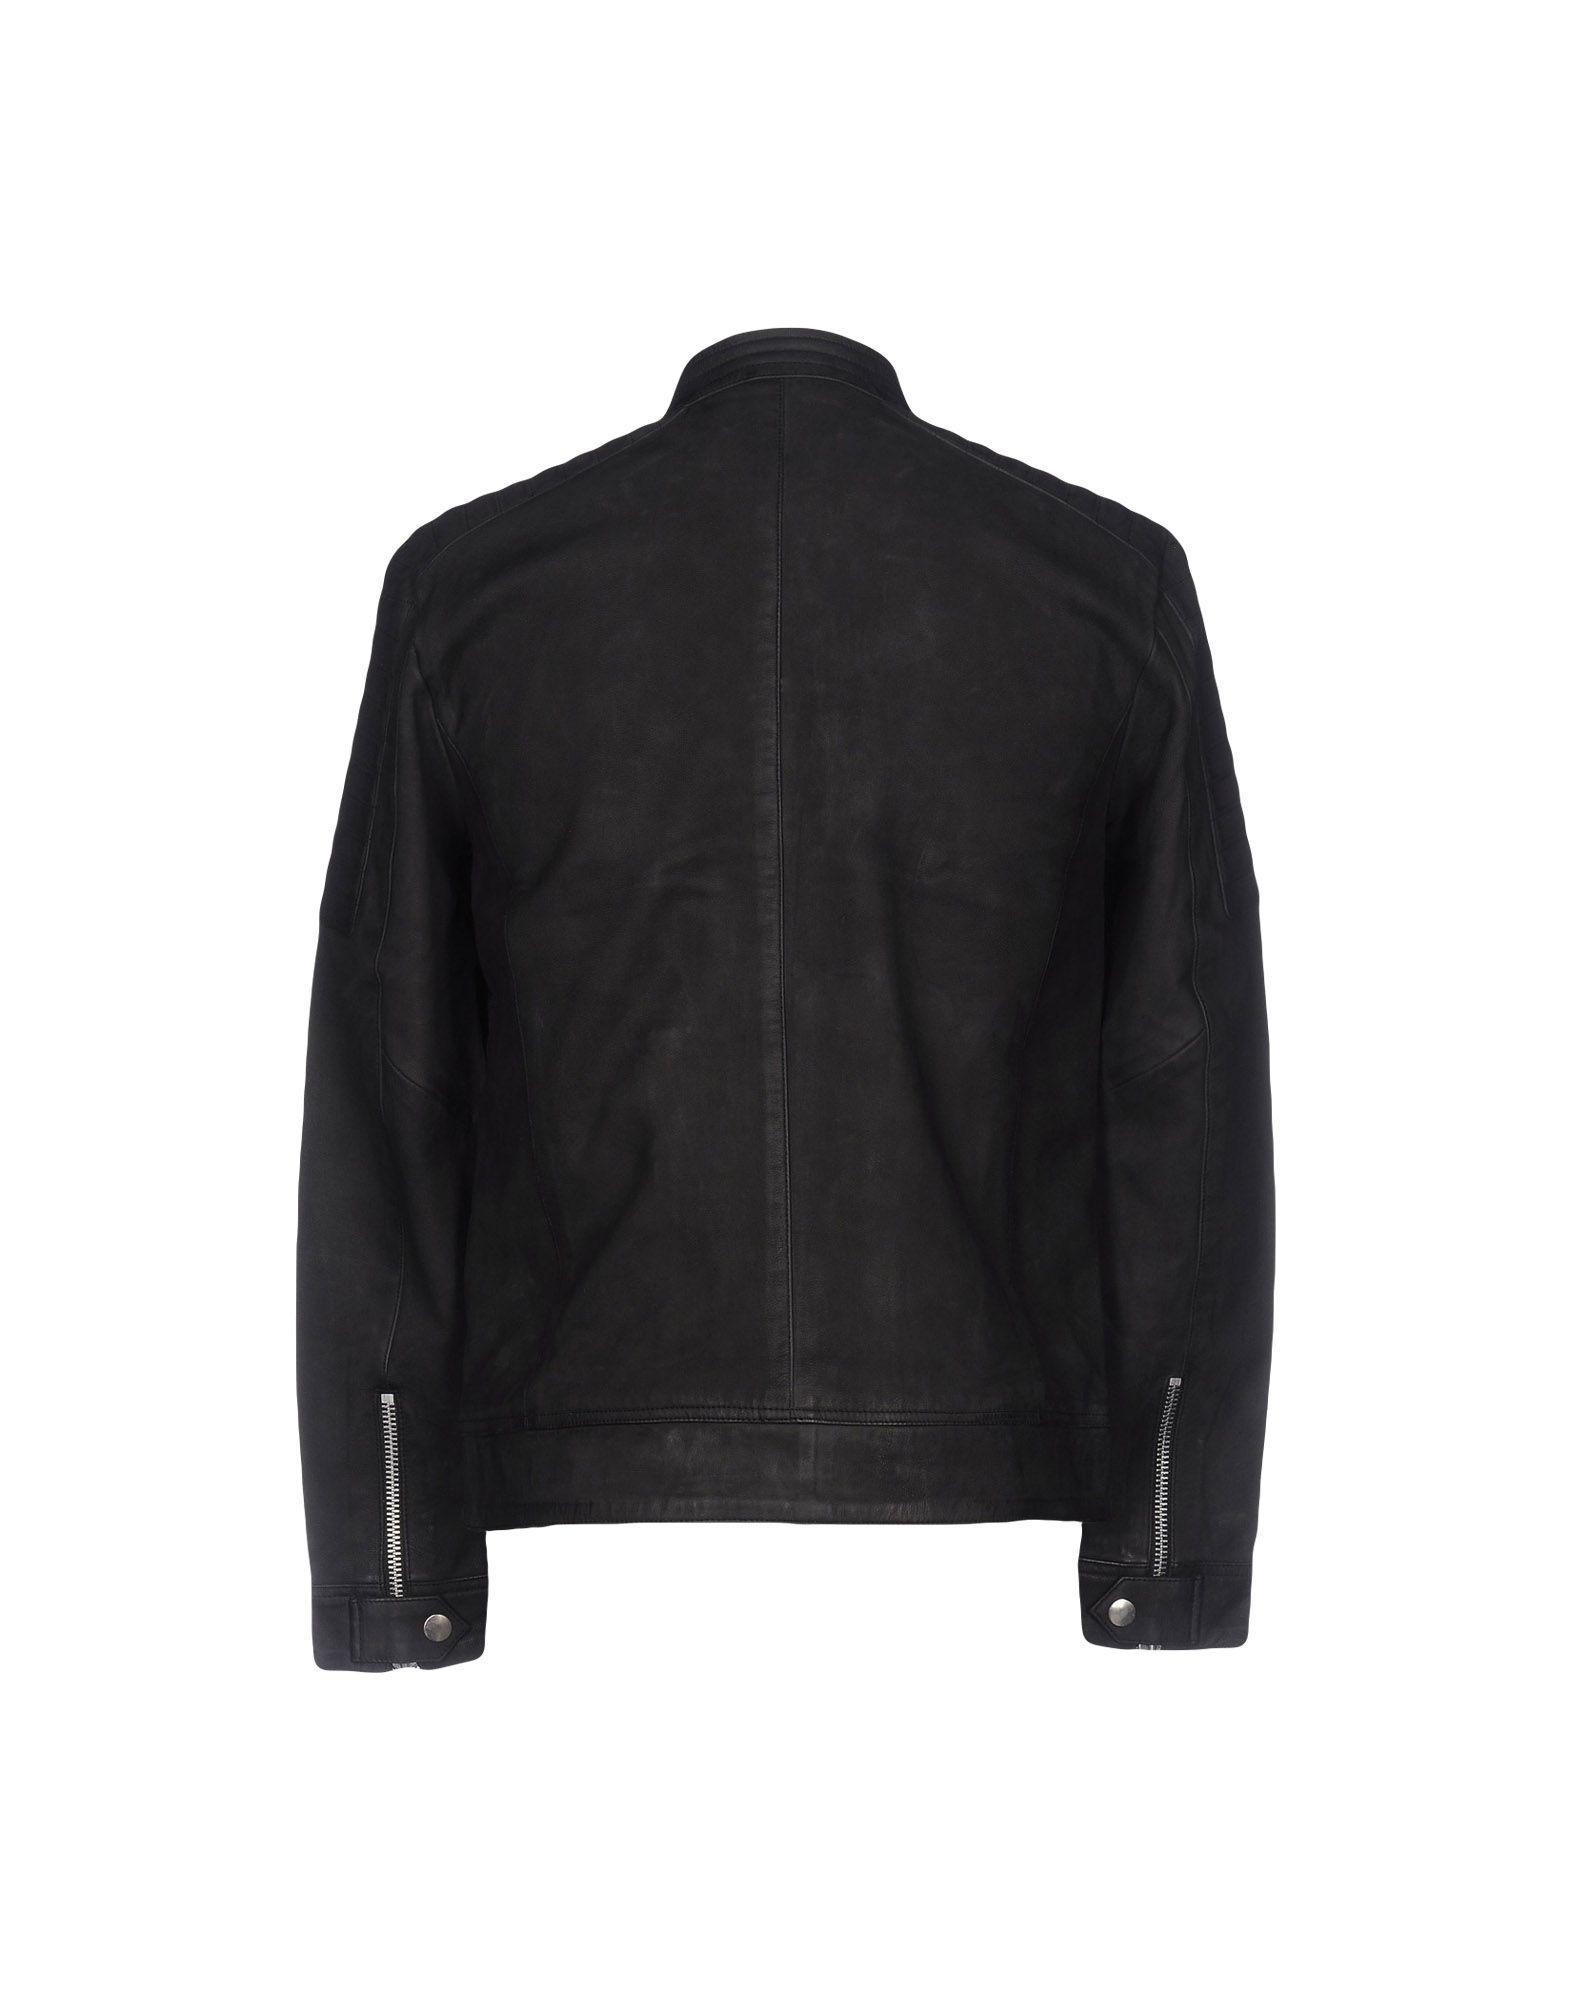 Lyst - Minimum Jacket in Black for Men